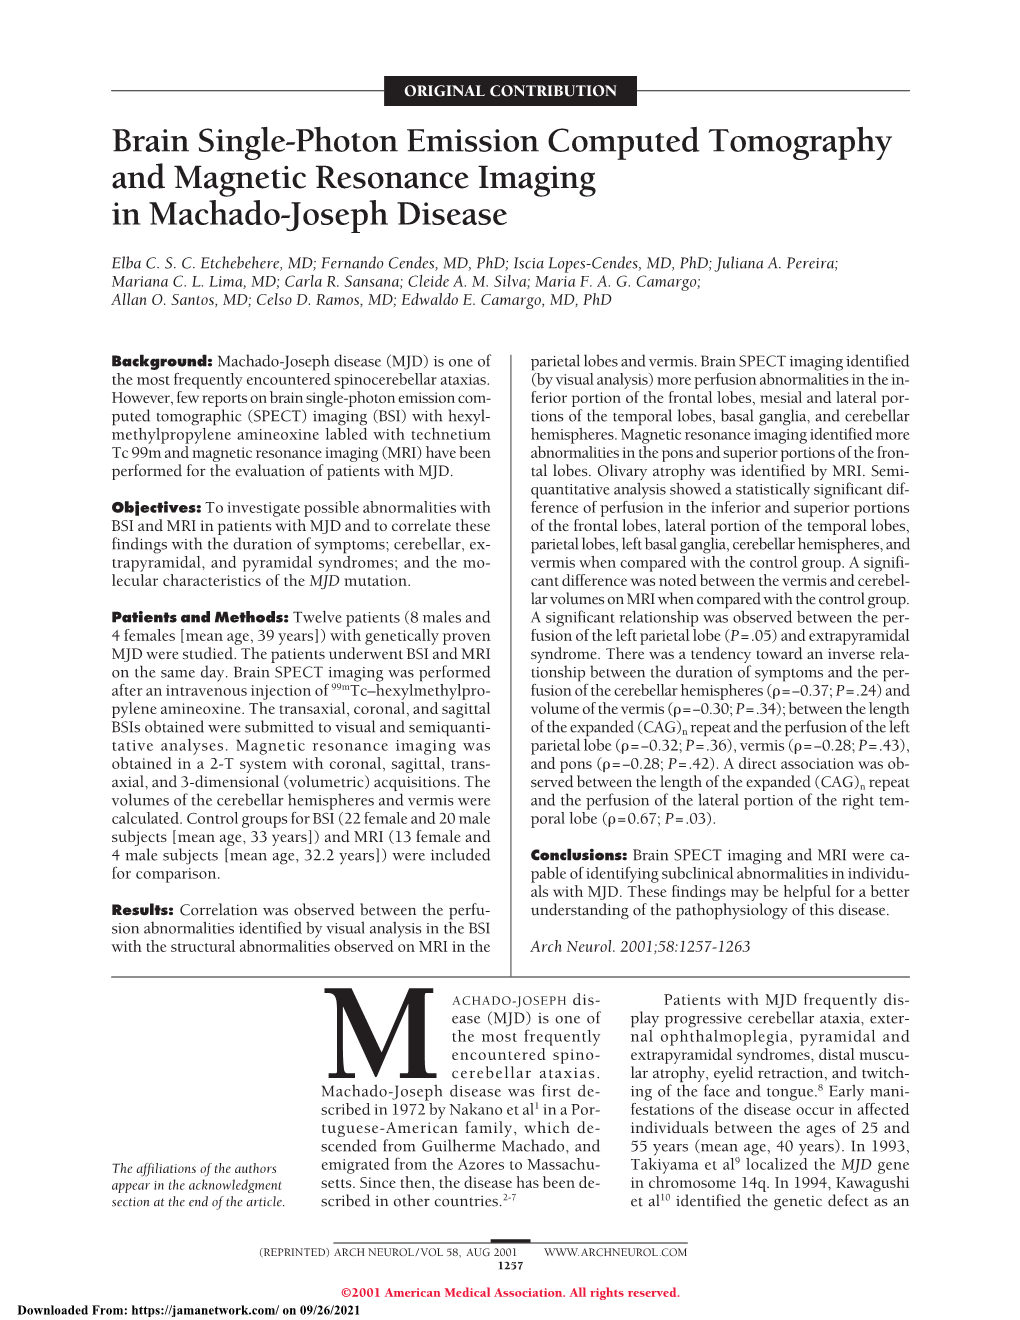 Brain Single-Photon Emission Computed Tomography and Magnetic Resonance Imaging in Machado-Joseph Disease